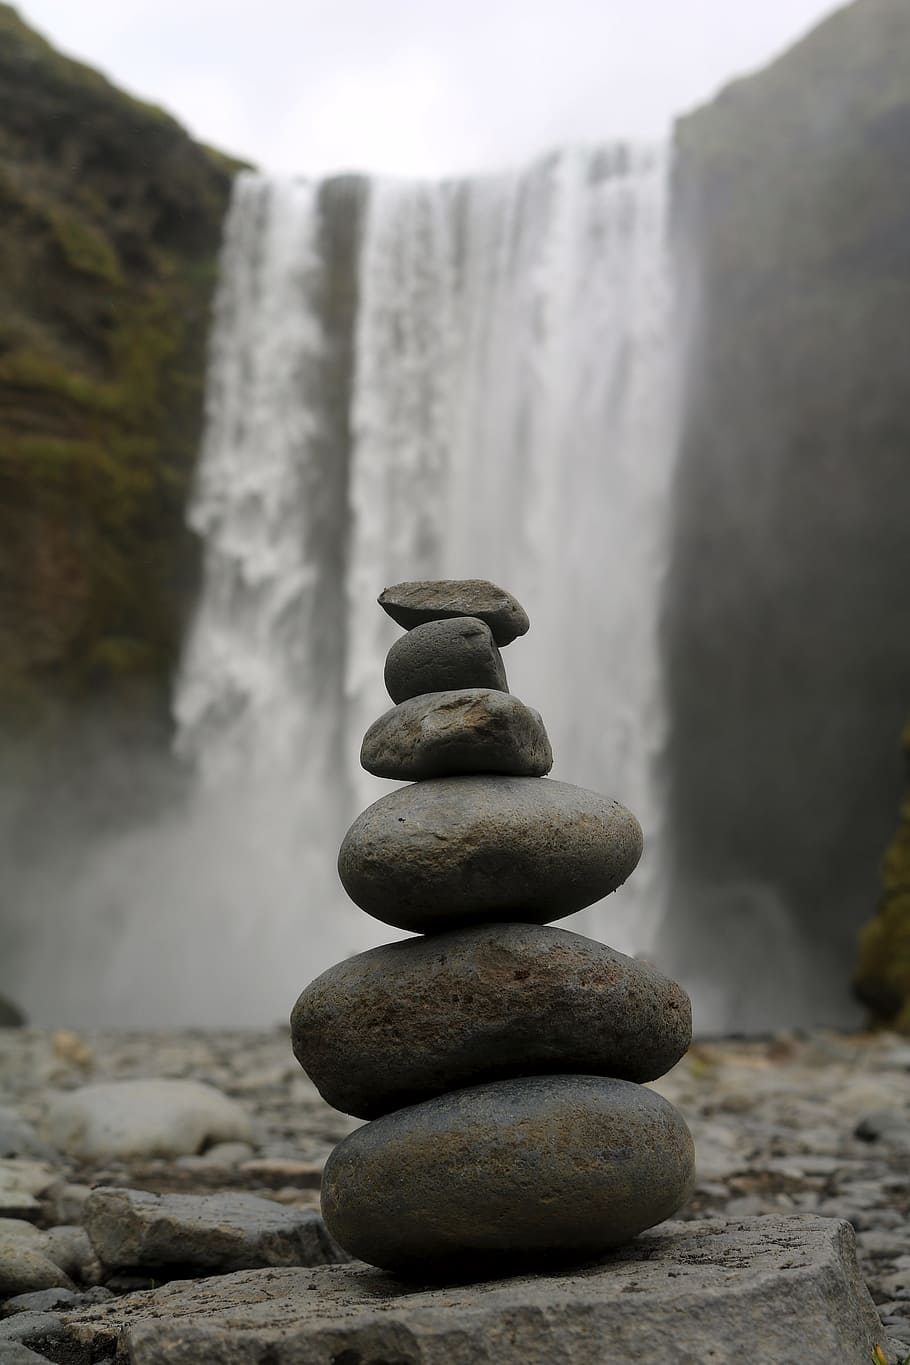 Cairn, Waterfall, Nature, rock - Object, zen-like, stone - Object, balance, tranquil Scene, pebble, outdoors